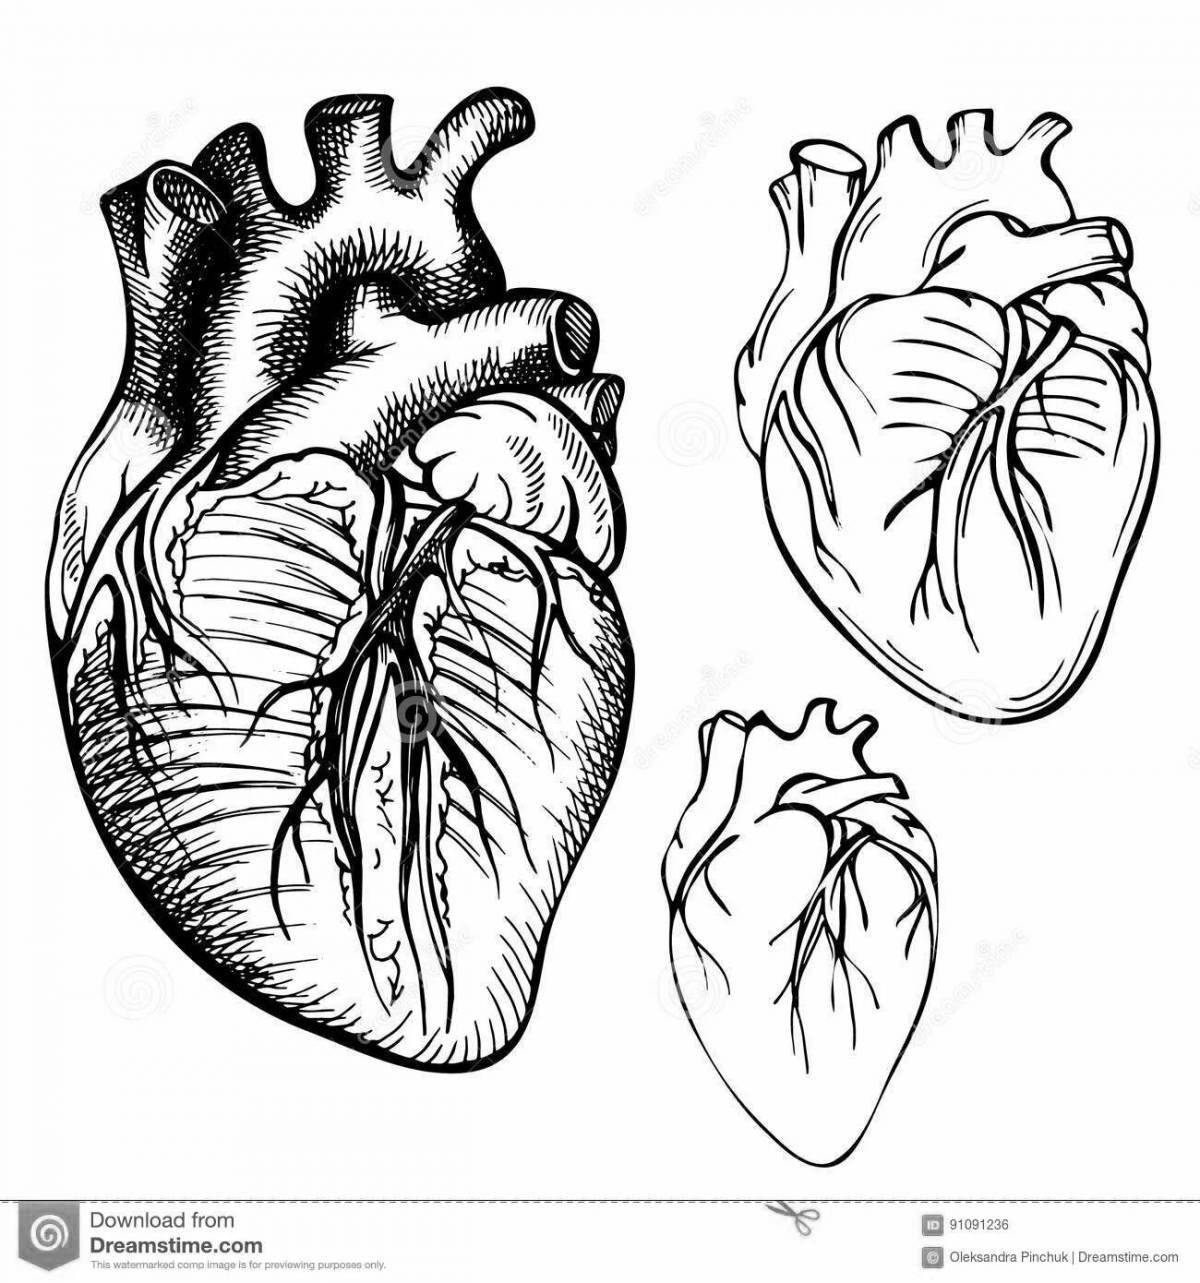 Fantastic heart organ coloring page